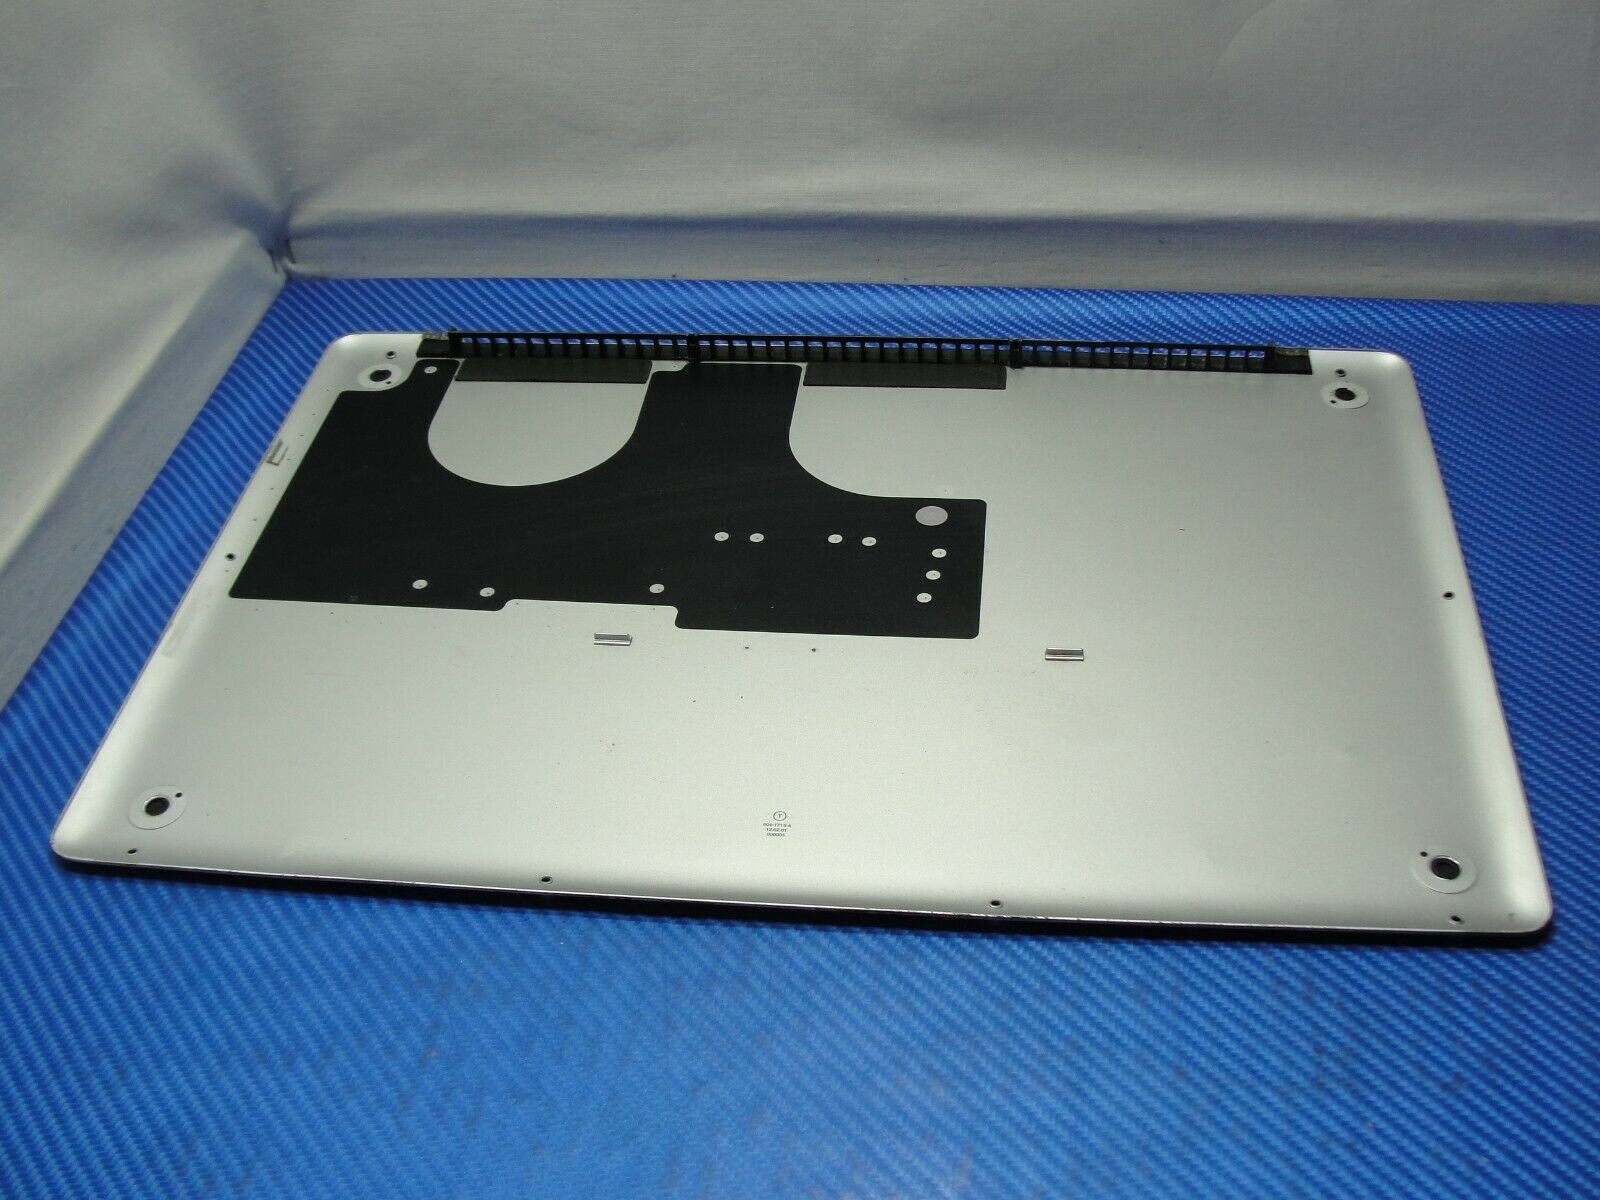 MacBook Pro A1297 MD311LL/A Late 2011 17